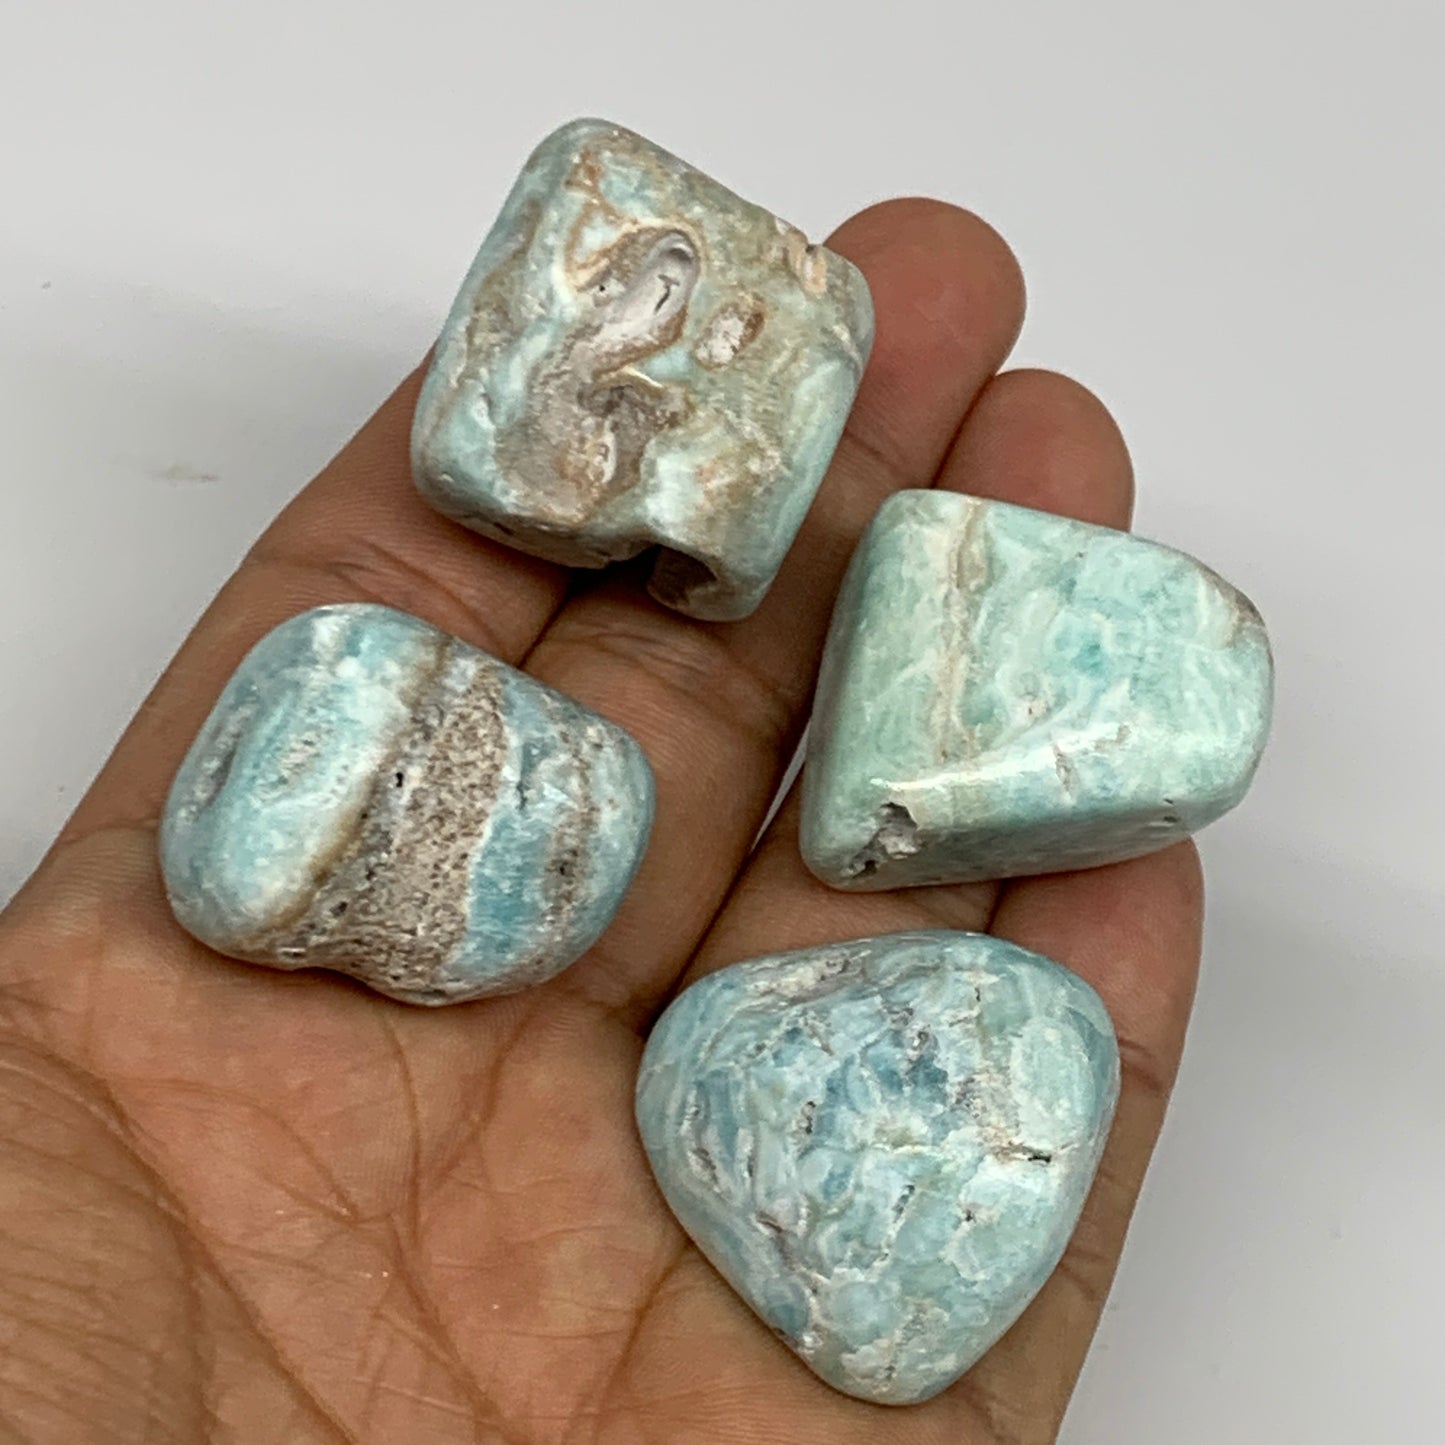 100.2g, 1"-1.2", 4pcs, Blue Aragonite Tumbled Stones @Afghanistan, B26951